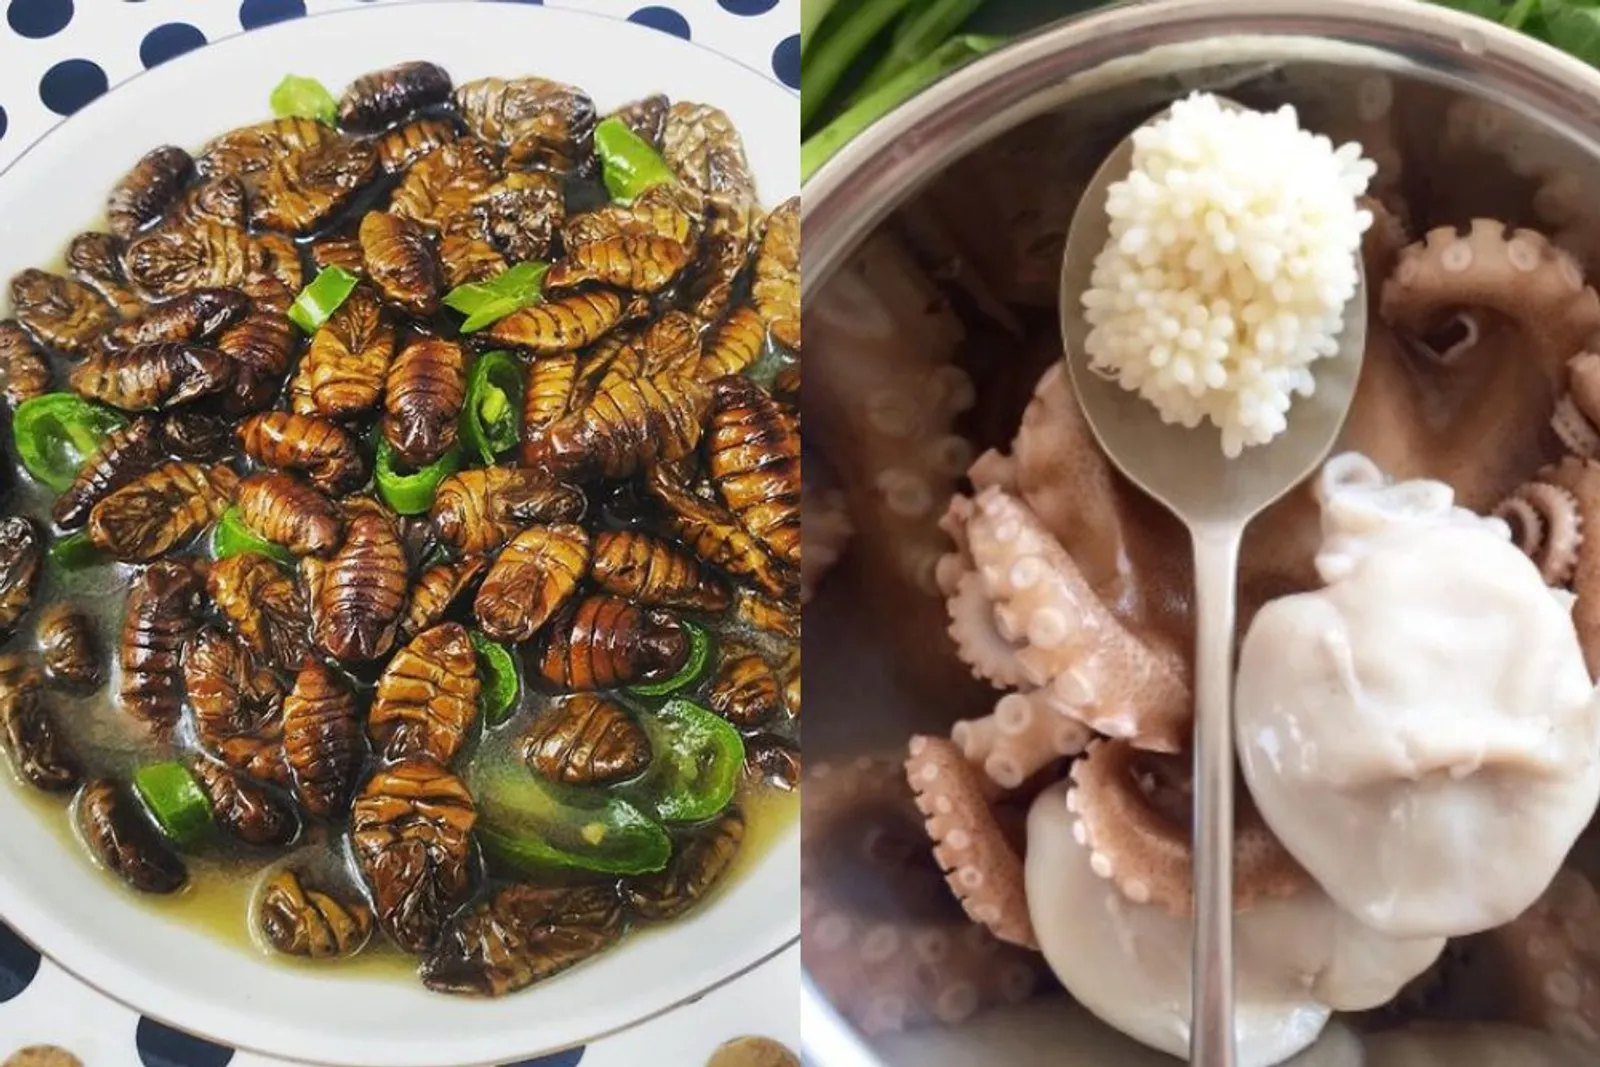 Termasuk Ulat Panggang, Ini 7 Makanan Korea Teraneh yang Ternyata Enak